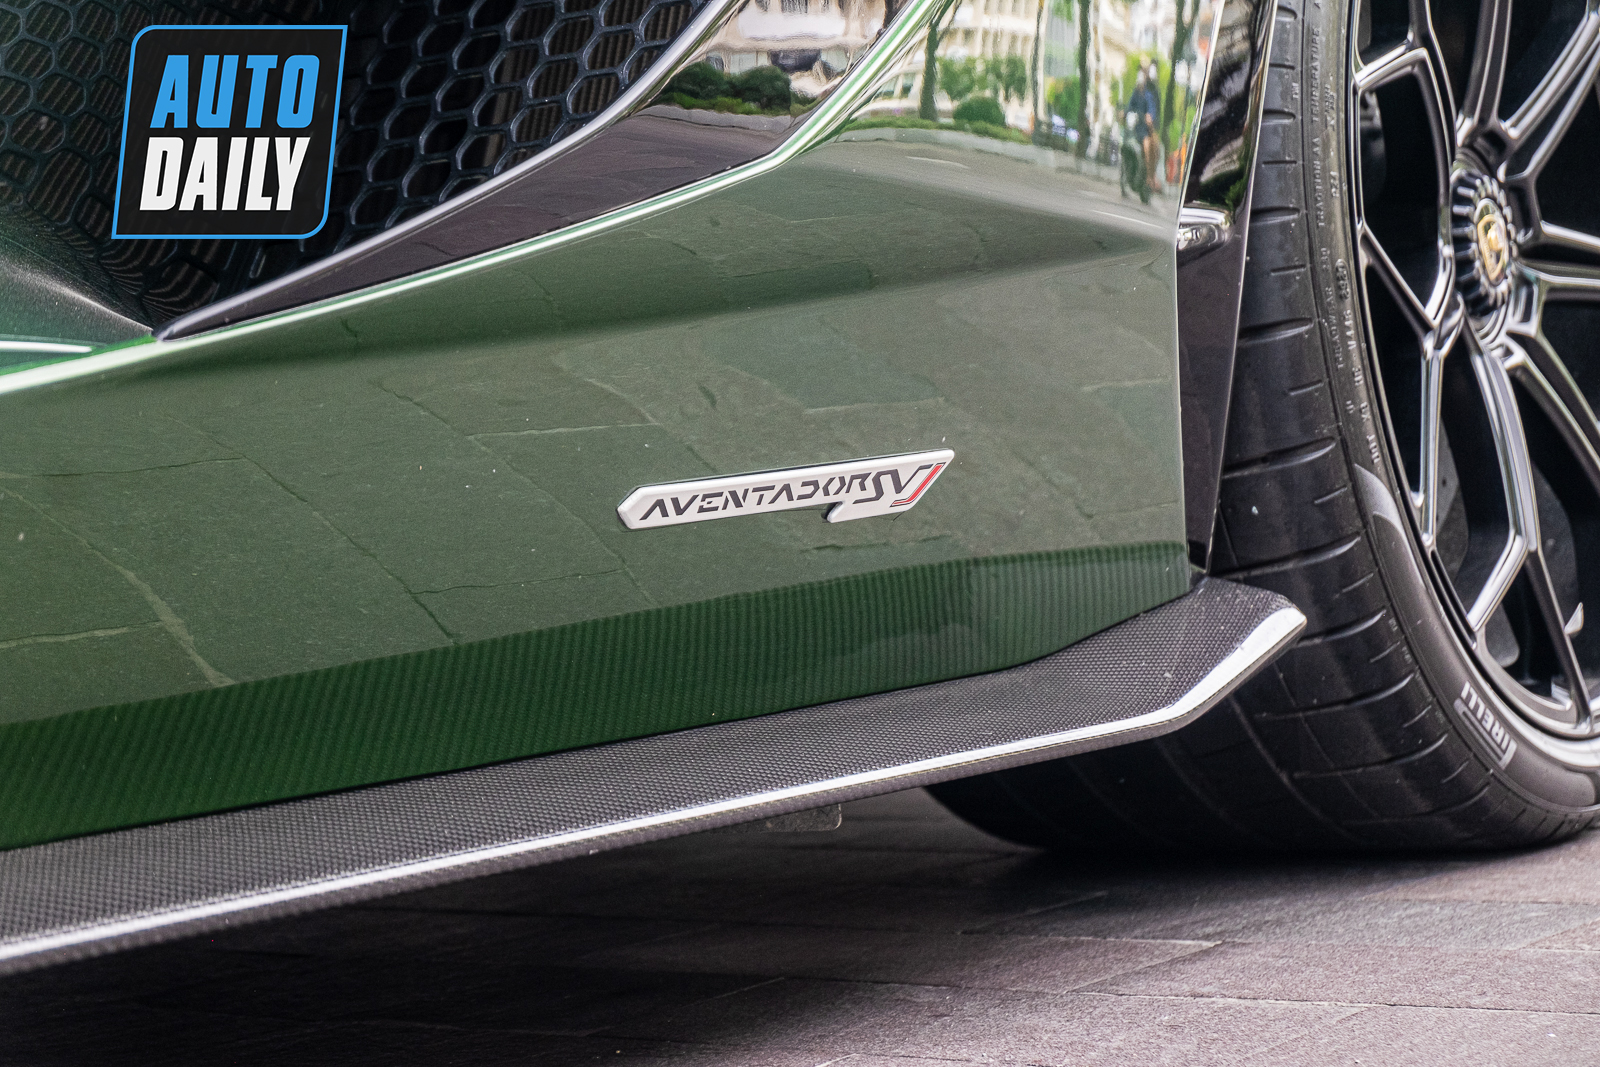 Bắt gặp Lamborghini Aventador SVJ triệu đô màu độc nhất Việt Nam lamborghini-aventador-svj-viet-nam-autodaily-7.JPG